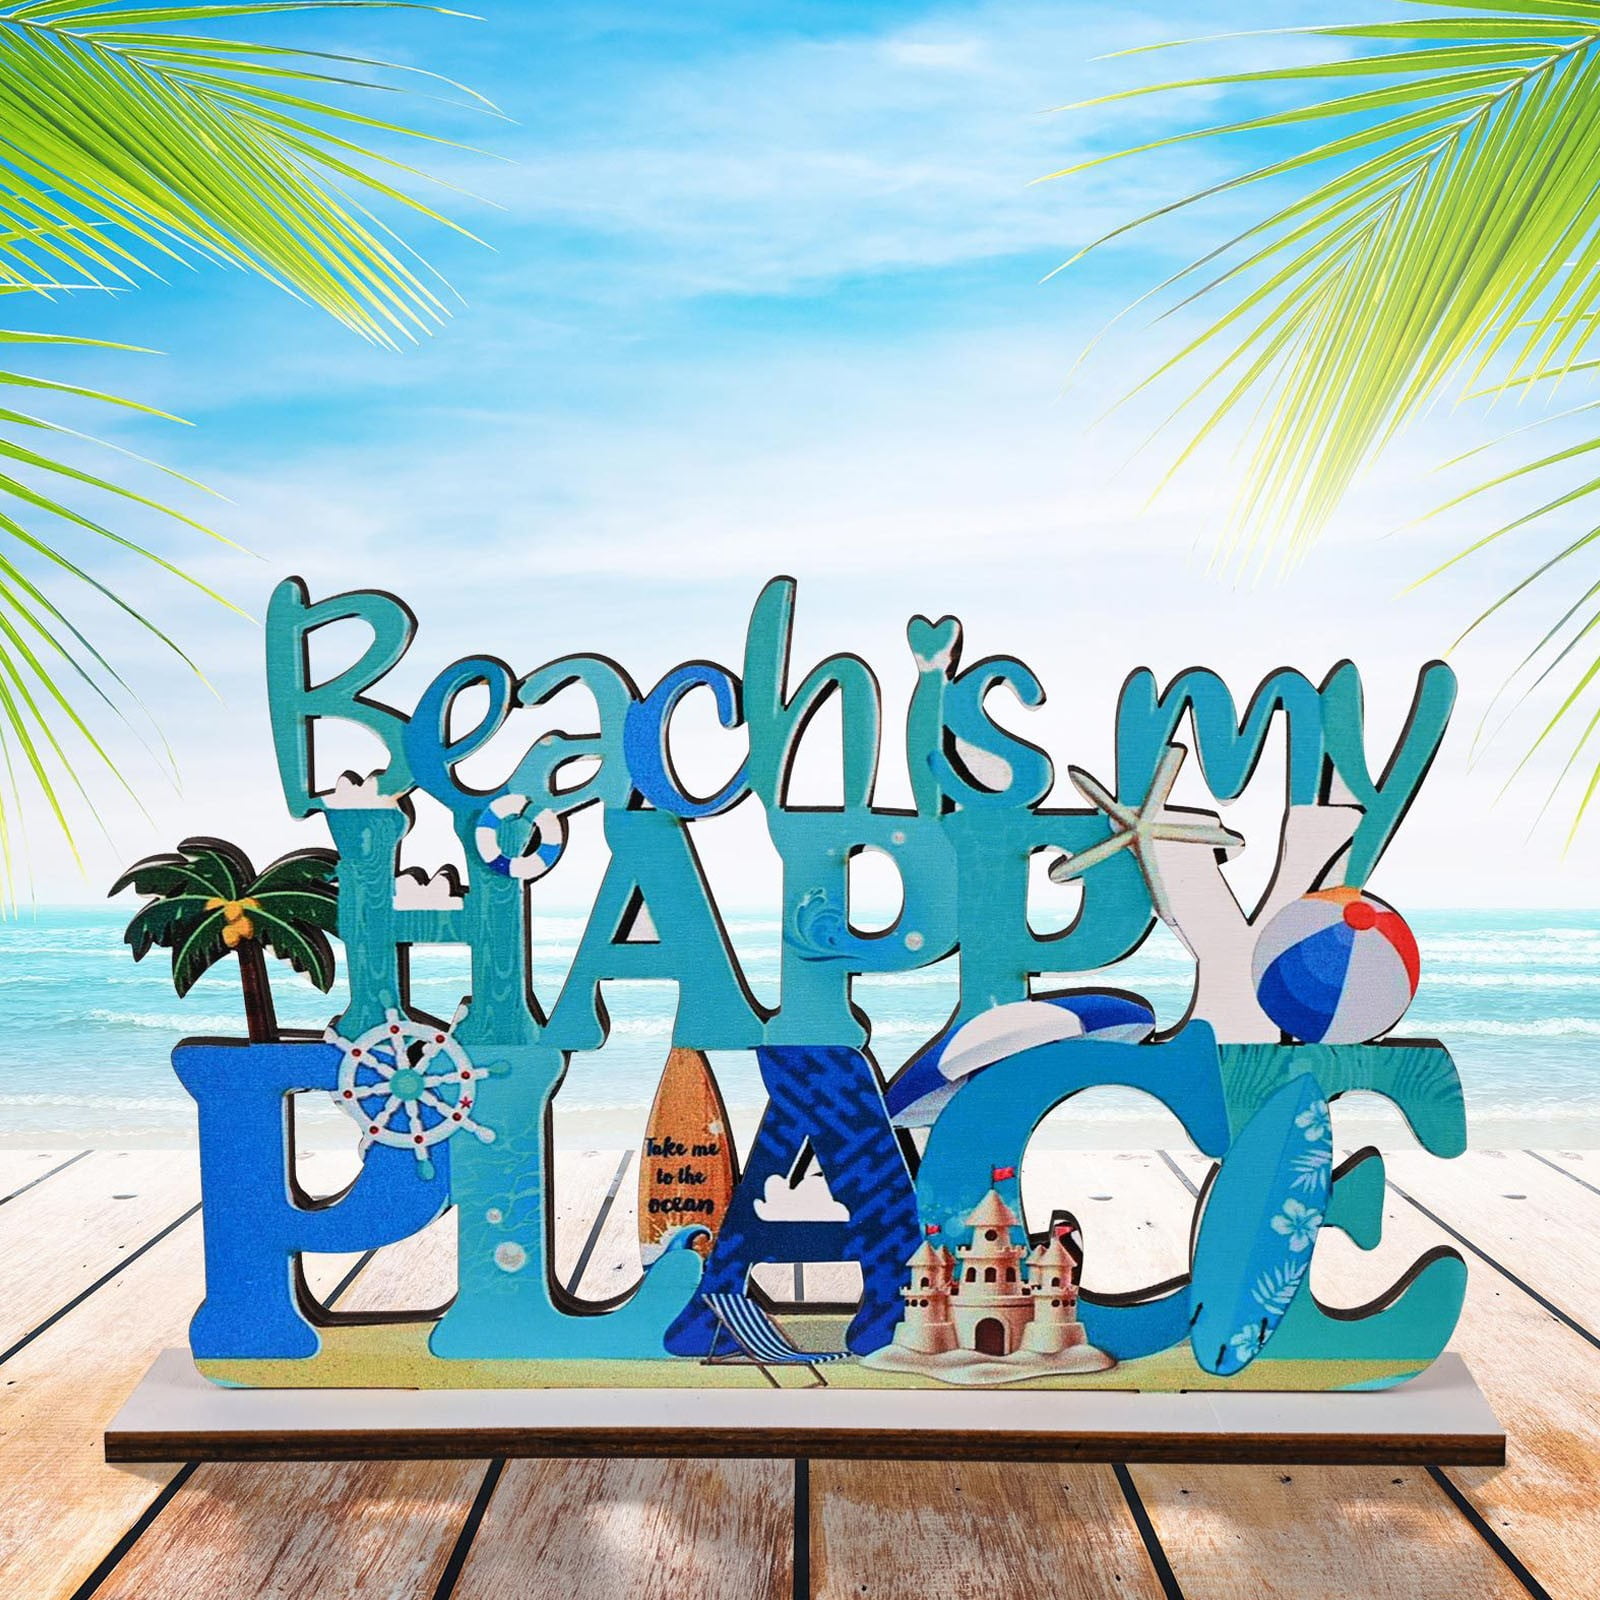 Wooden Shabby Chic Beach Sign Nautical Seaside Nautical Ornament Bathroom Plaque 